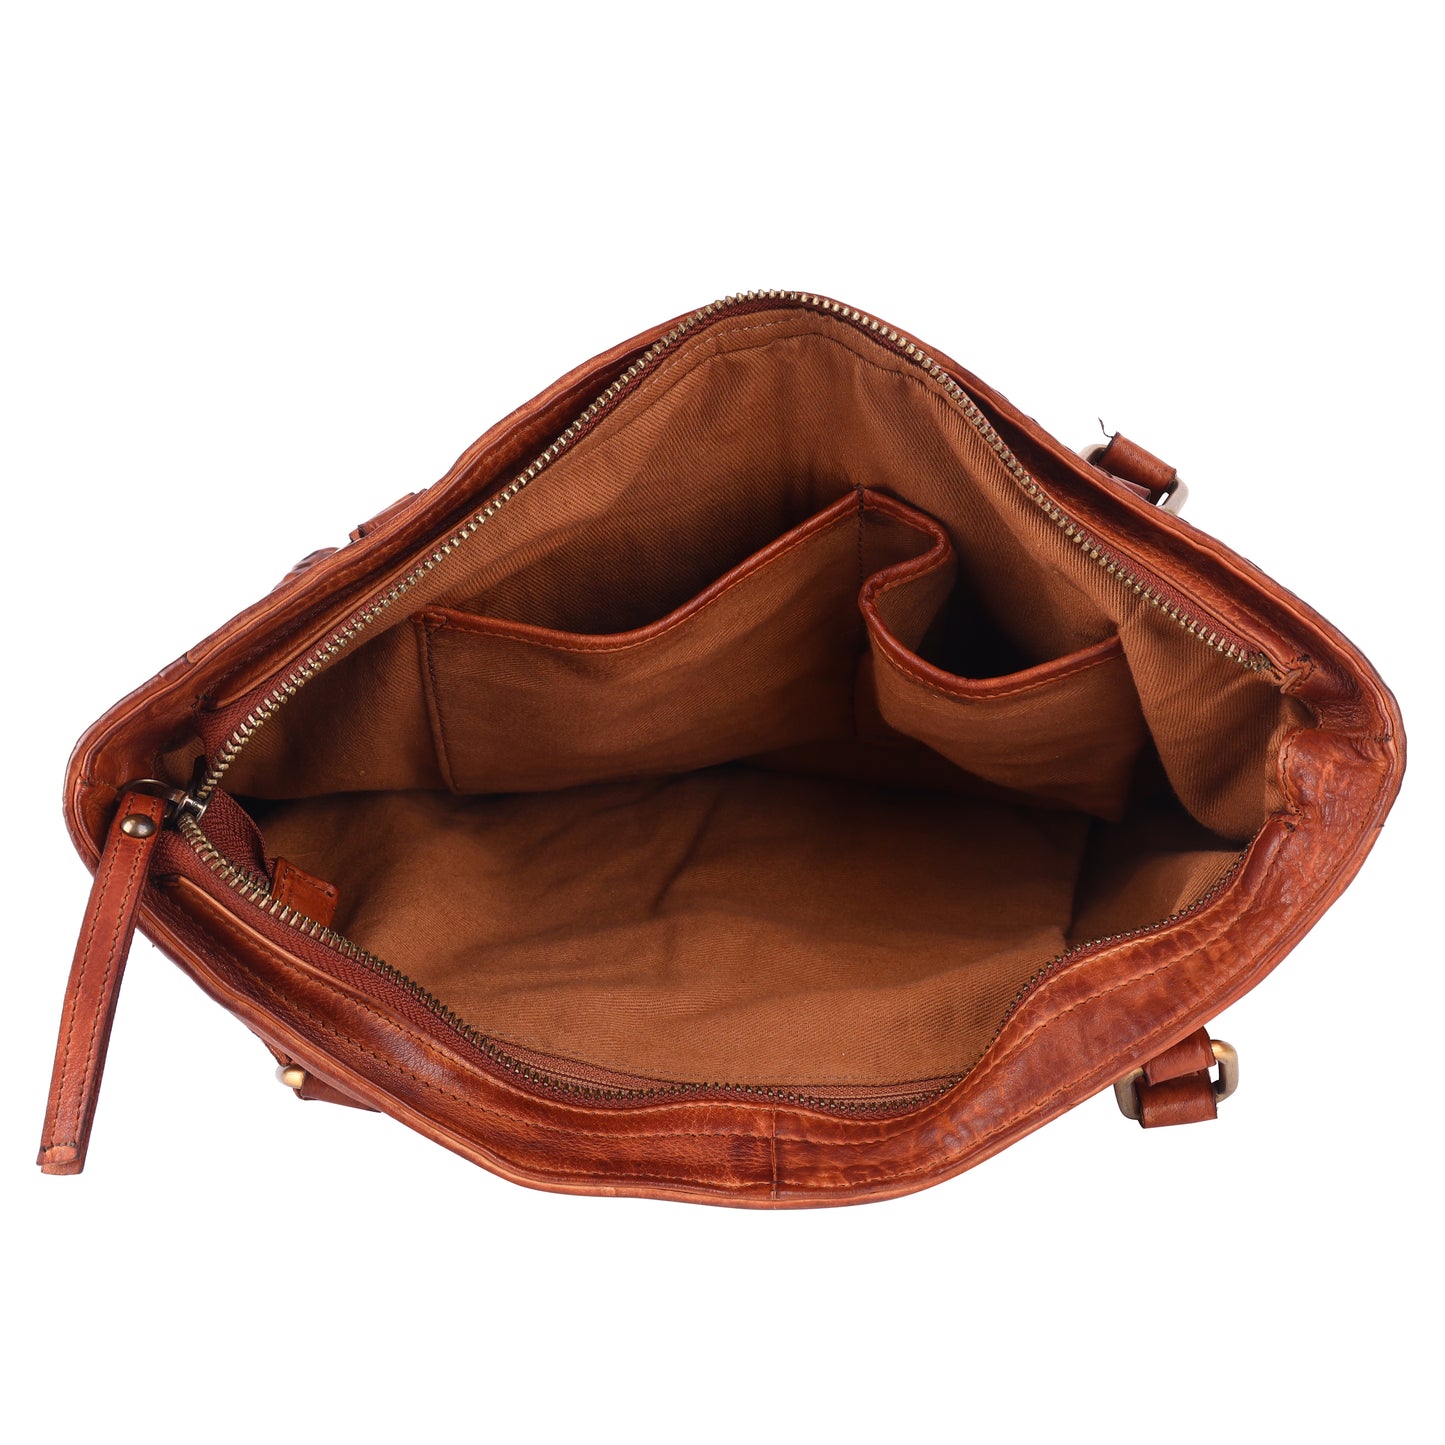 Chantal - The Handbag